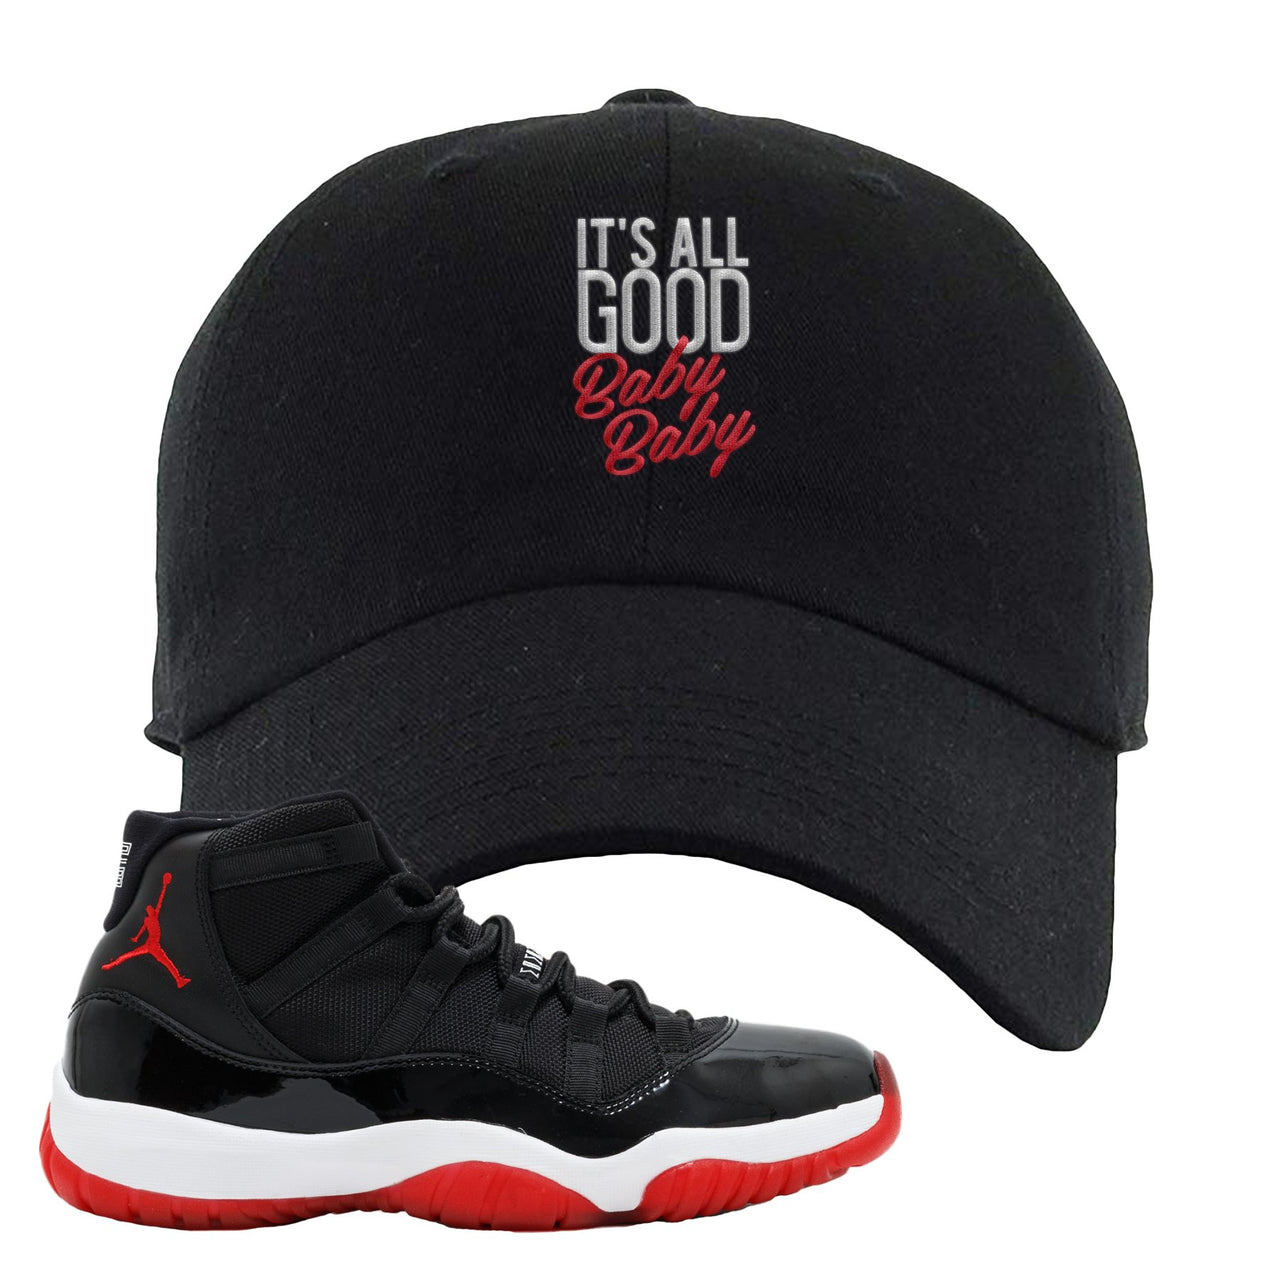 Jordan 11 Bred It's All Good Baby Baby Black Sneaker Hook Up Dad Hat